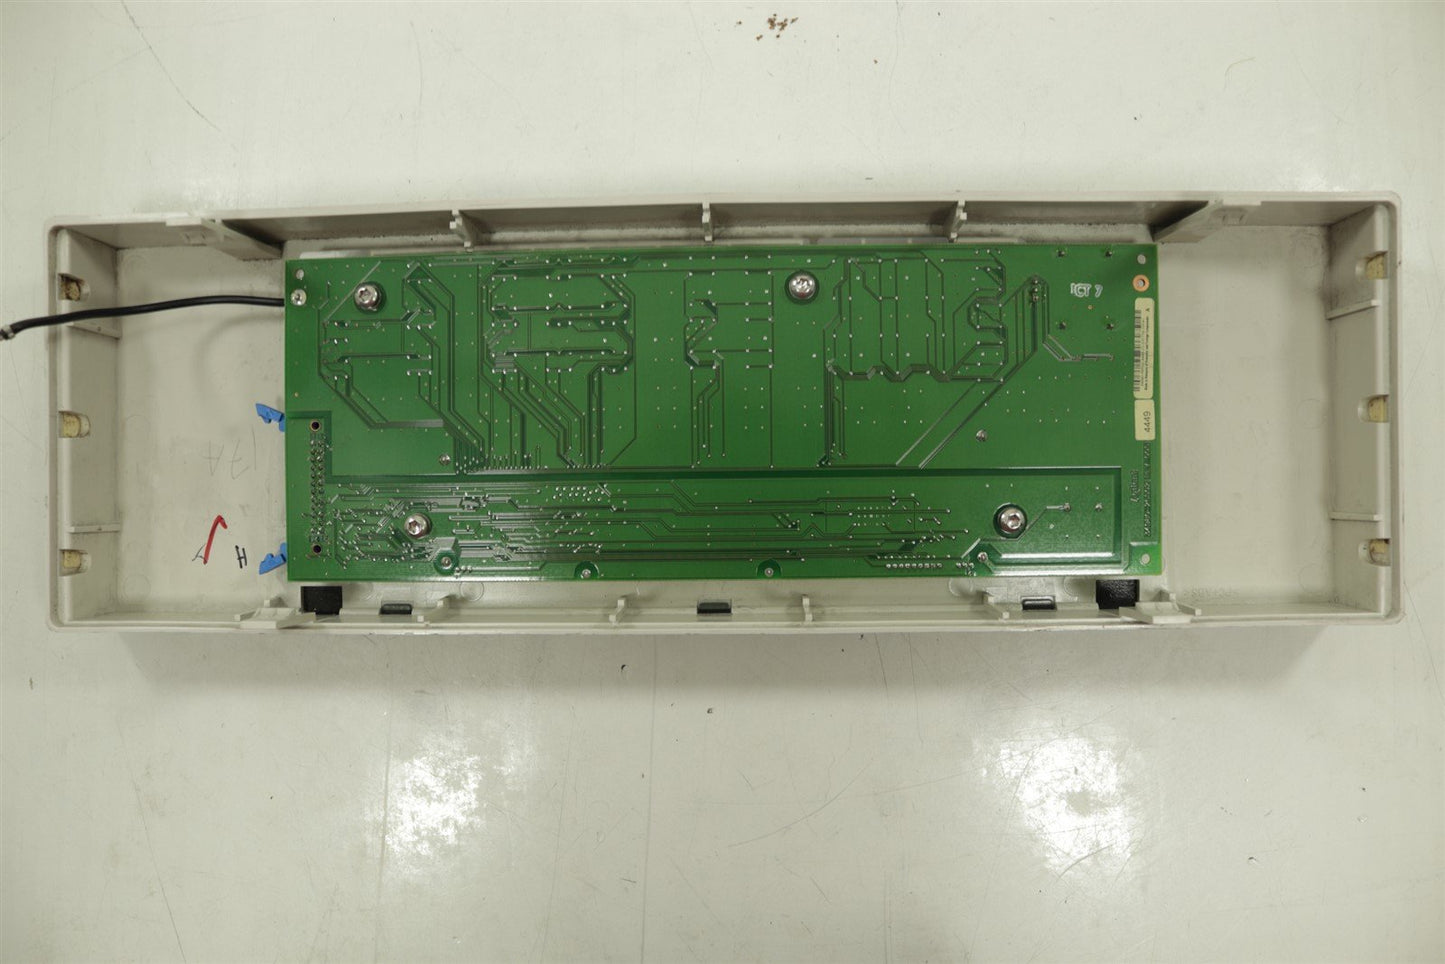 HP Agilent 34980A Multification Switch/Measure Unit Front Panel PCB 34980-26502